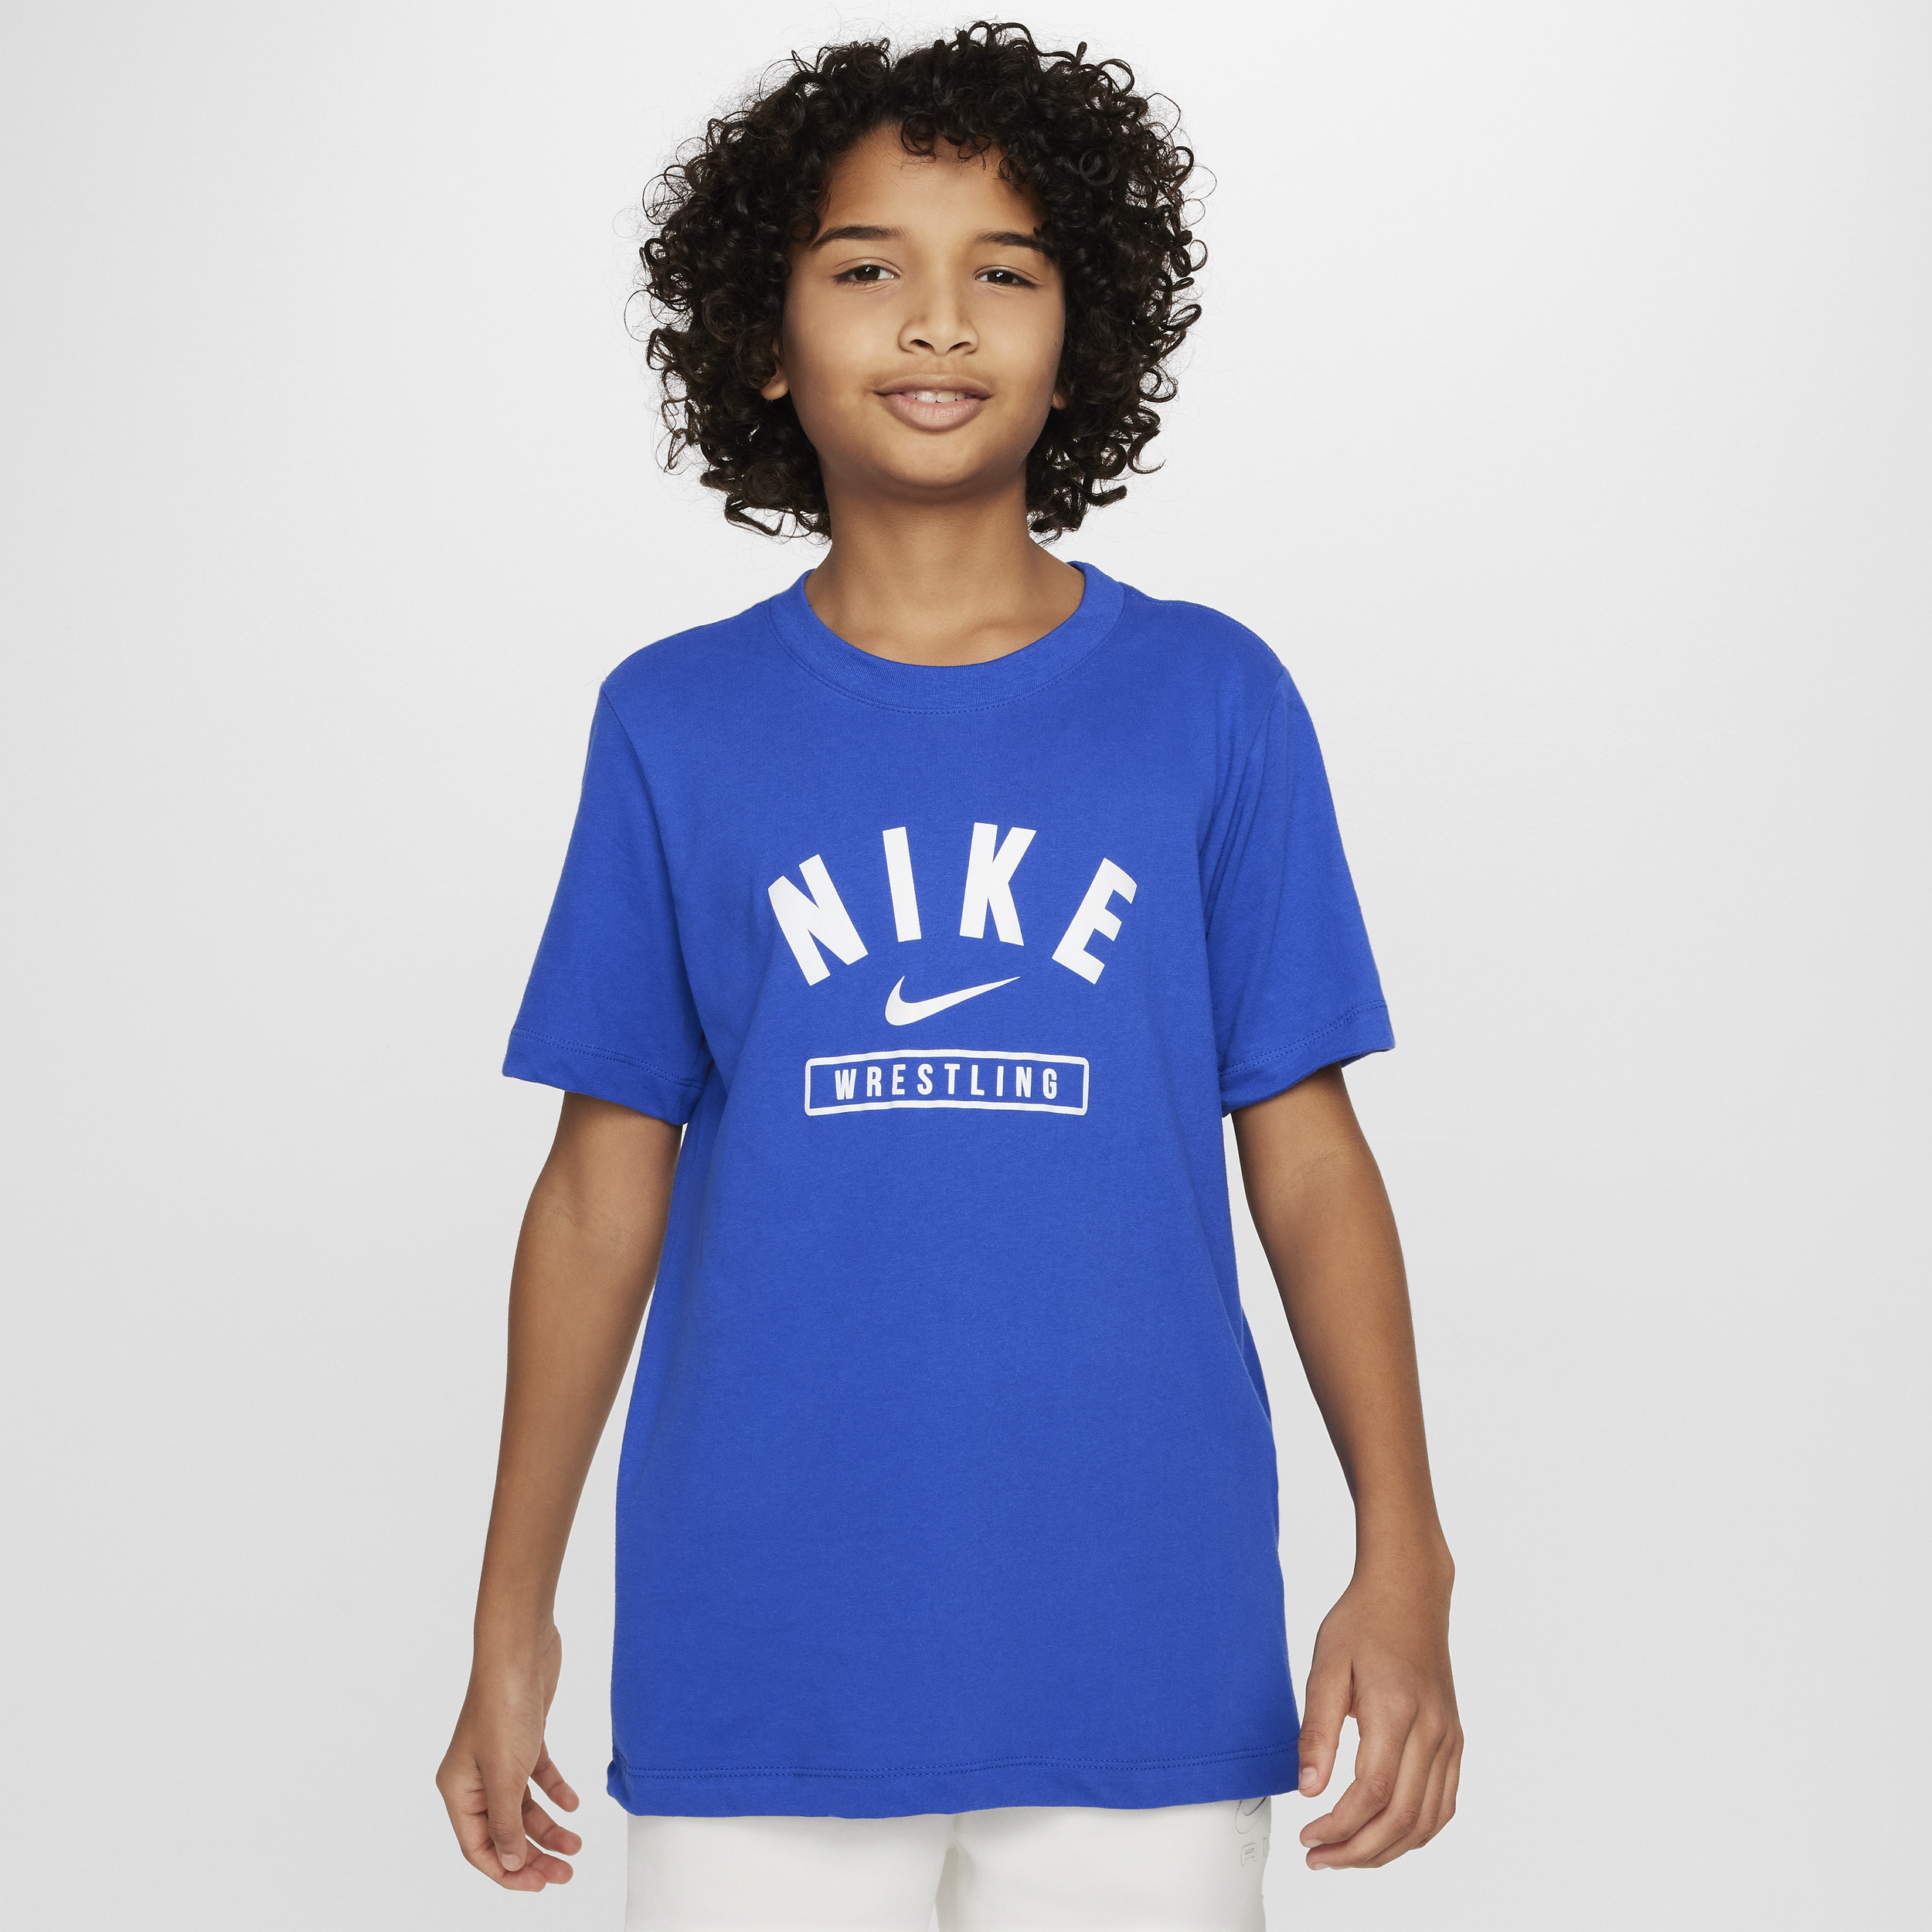 Nike Big Kids' Wrestling T-shirt In Blue